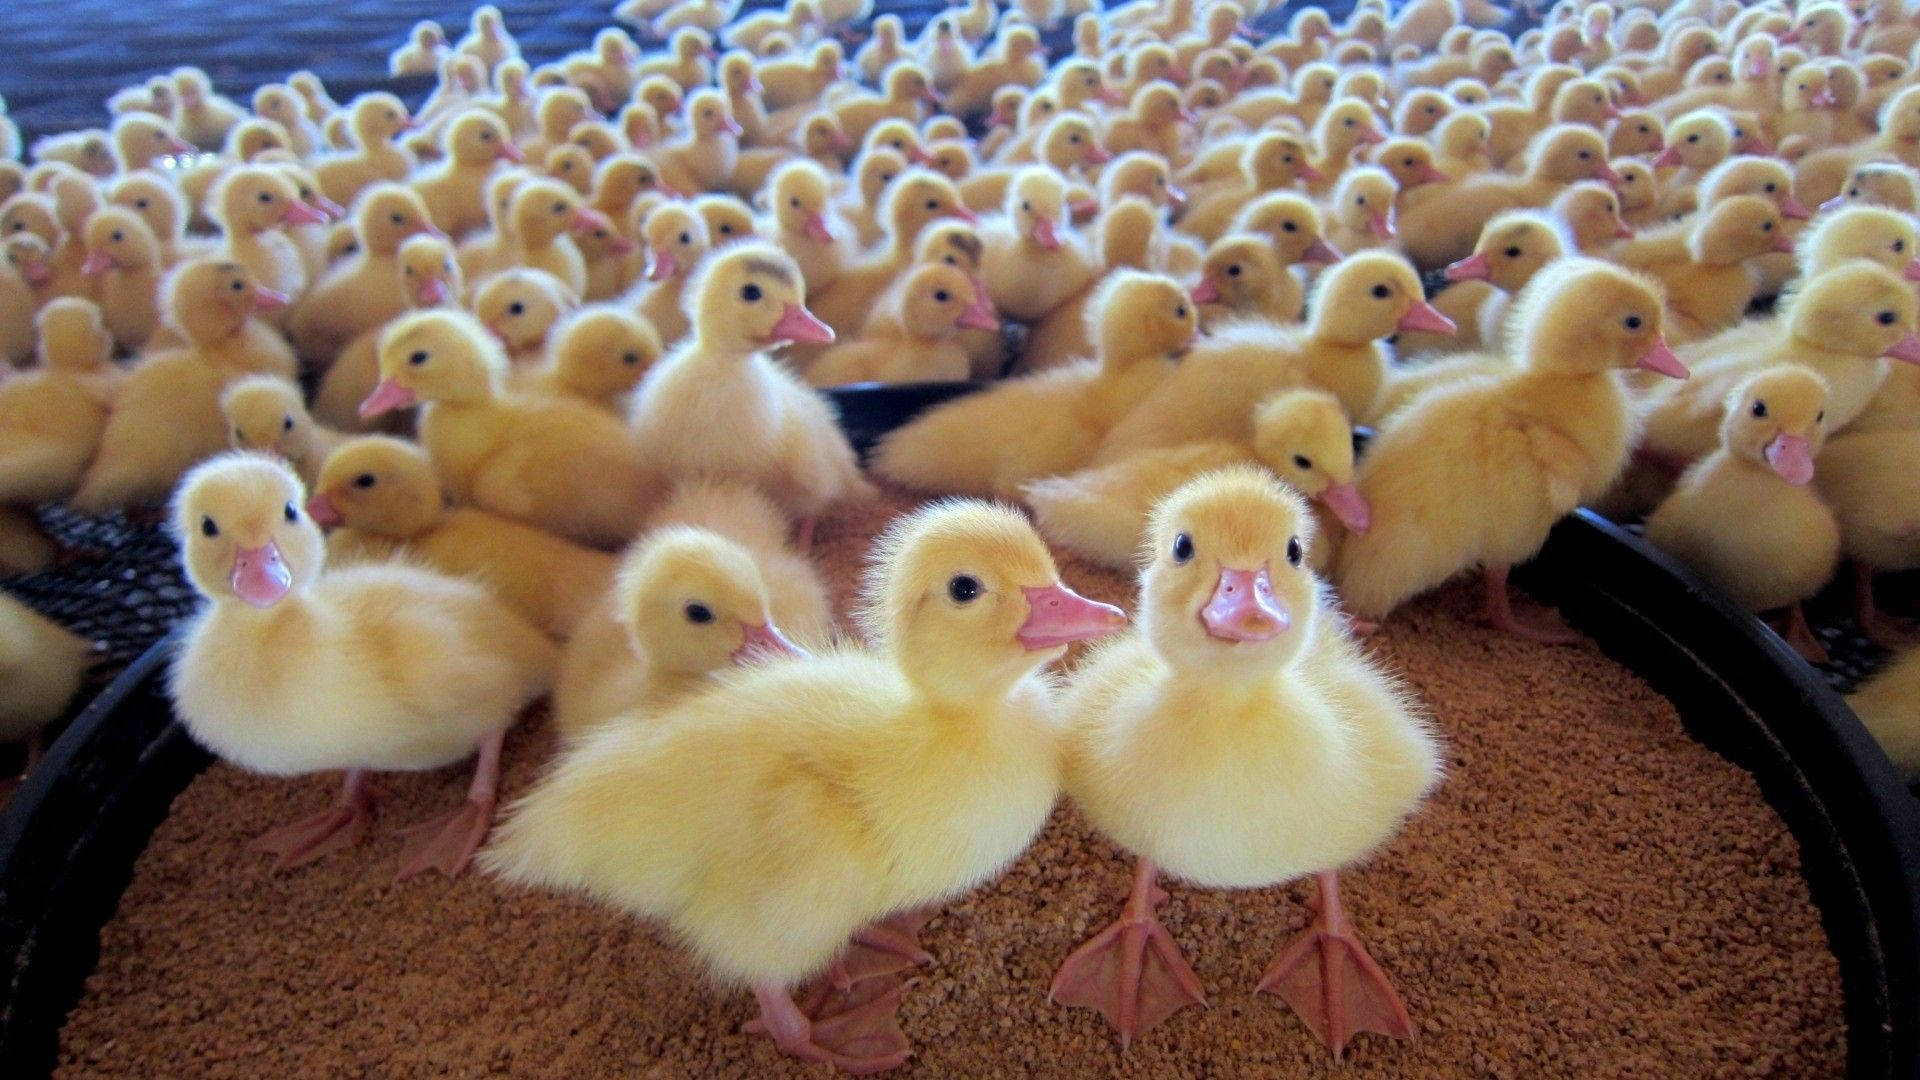 Crowded Baby Ducks Wallpaper